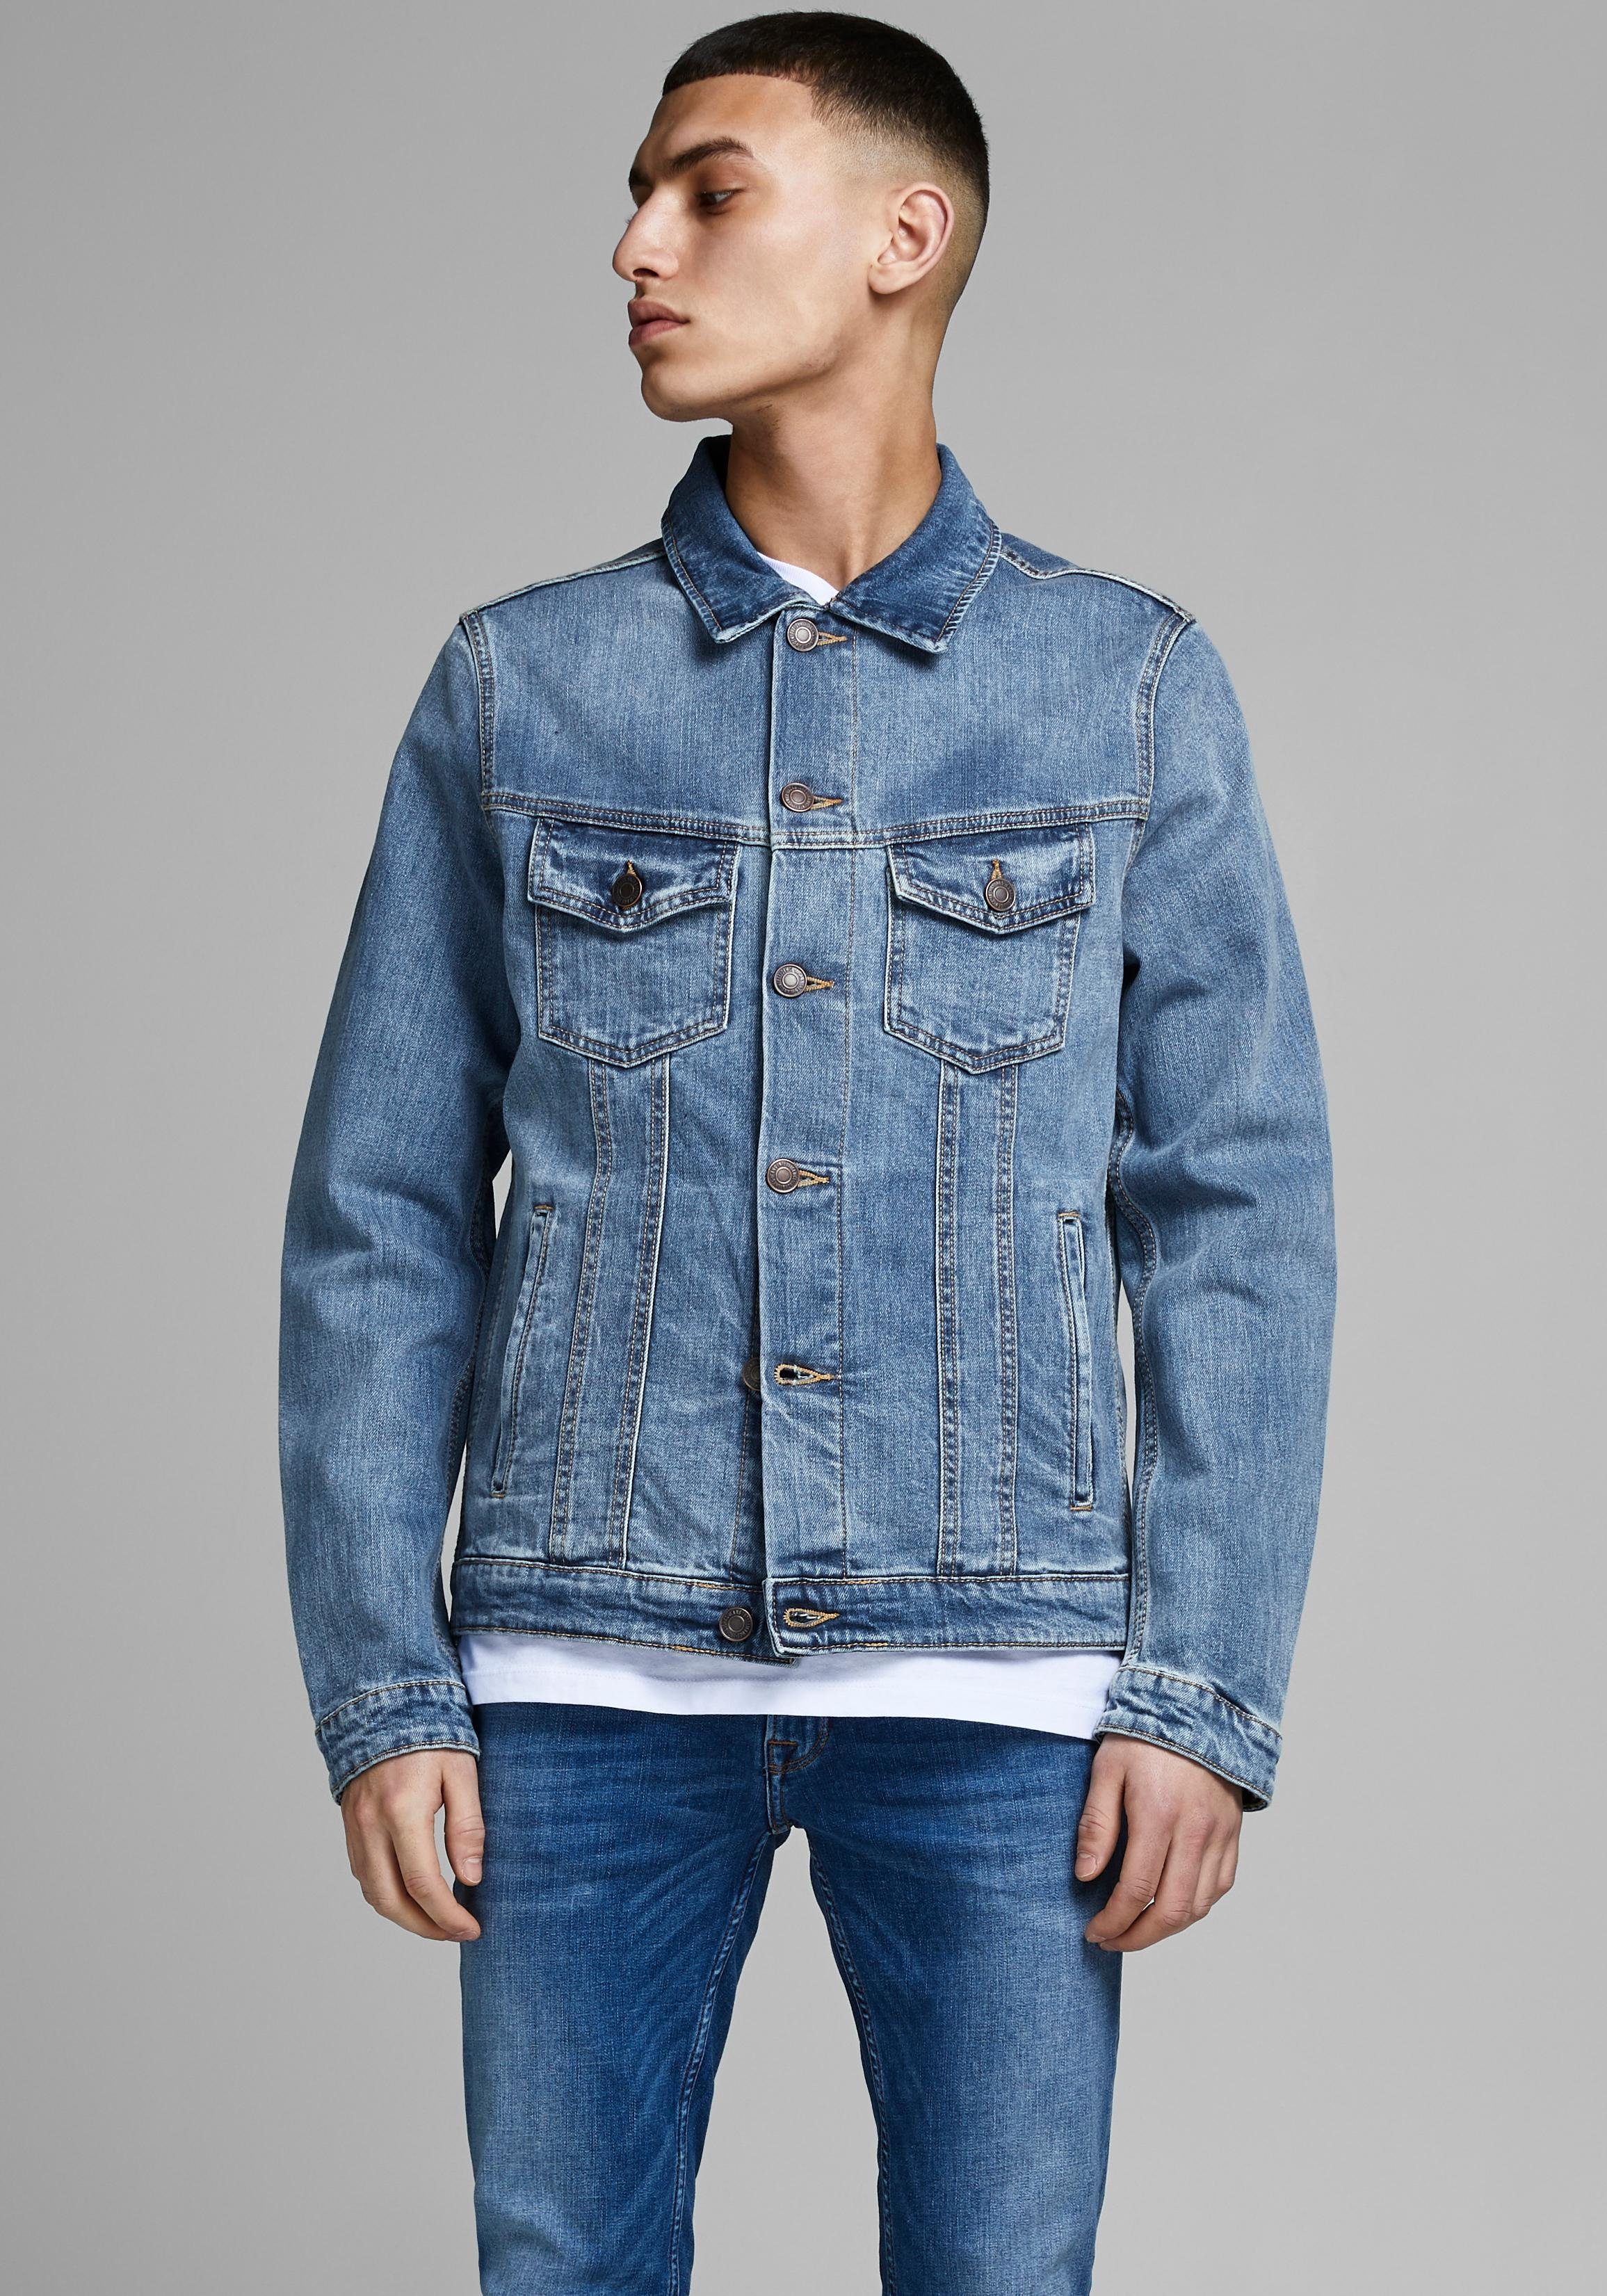 BEHYPE Jeansjacke Destroyed Denim-Shirt Jacke Jeans-Hemd Blau/Schwarz/Grau NEU 